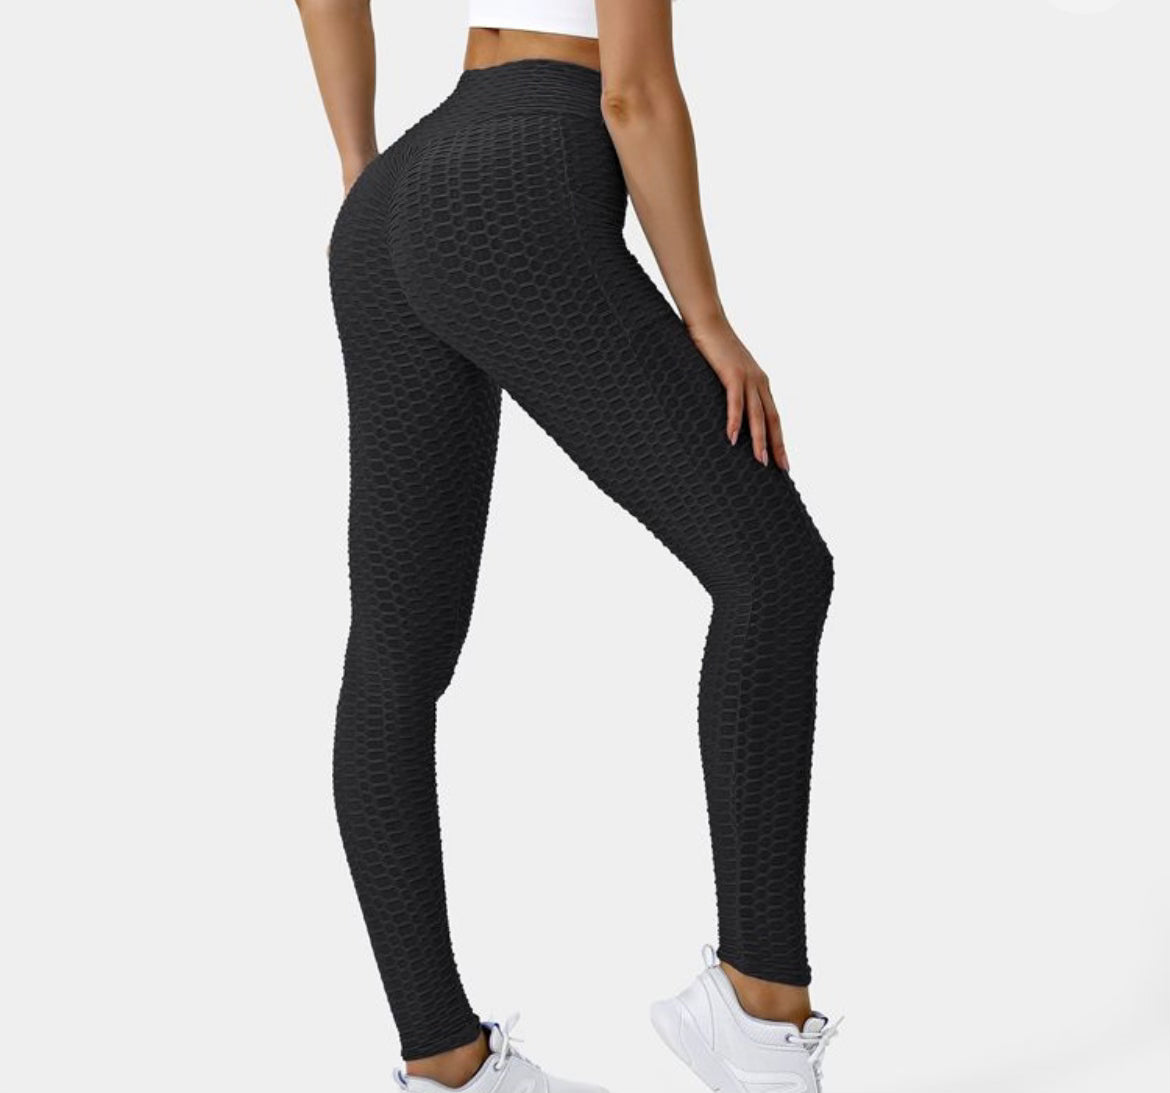 Push Up Leggings Women's Clothing Anti Cellulite Legging Fitness Black –  Sleek Meek Clothing Co